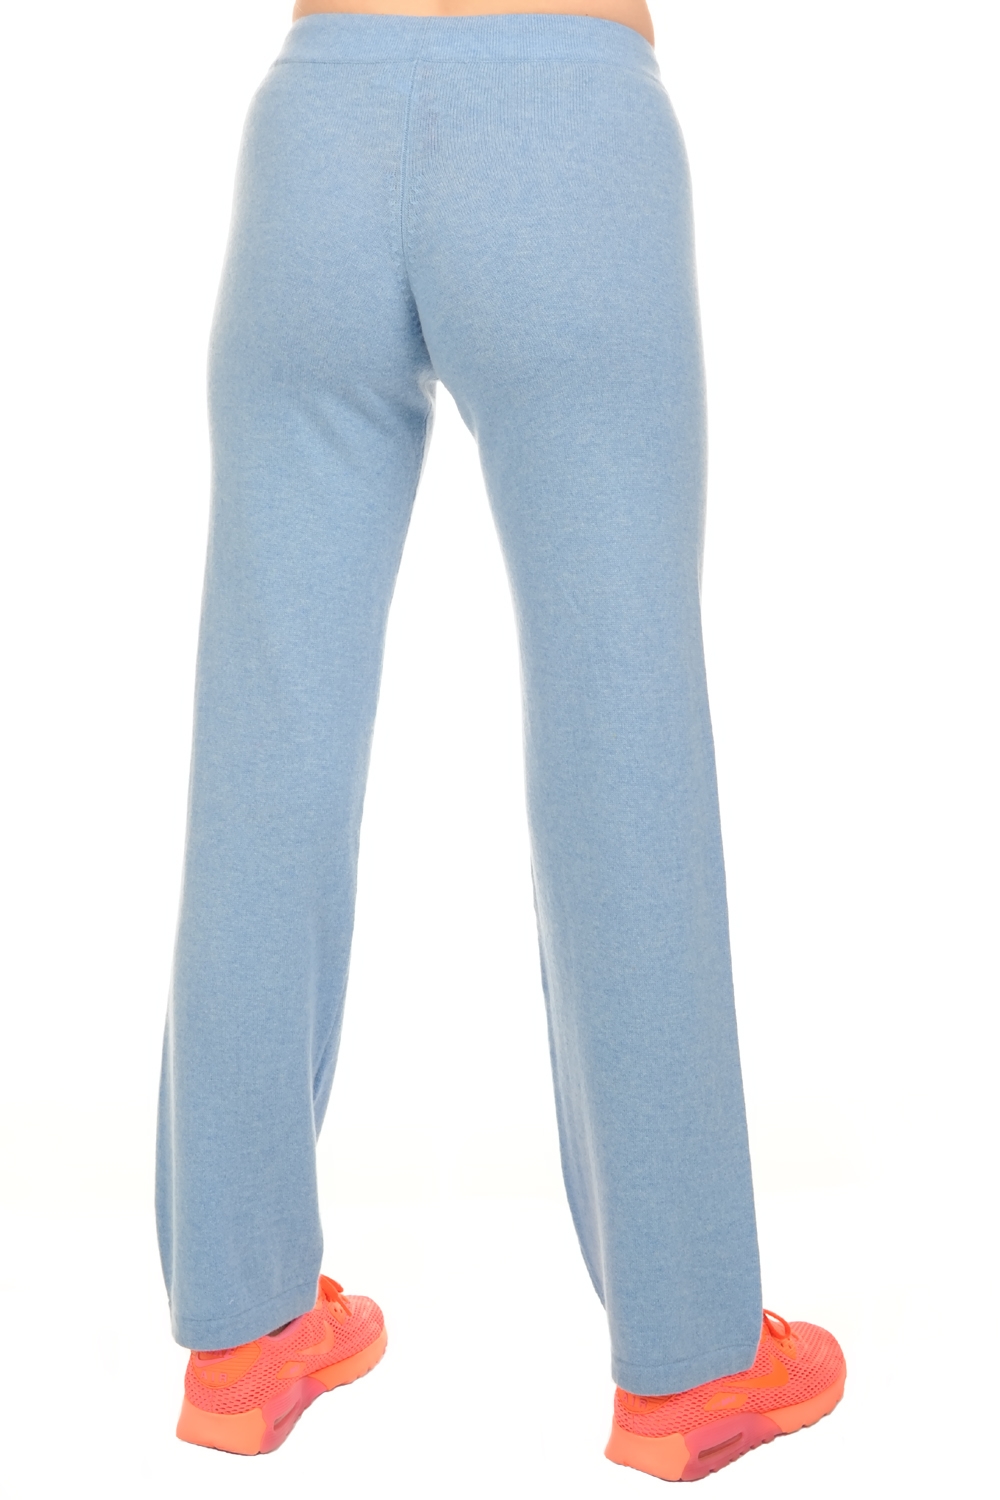 Cashmere ladies trousers leggings malice azur blue chine s